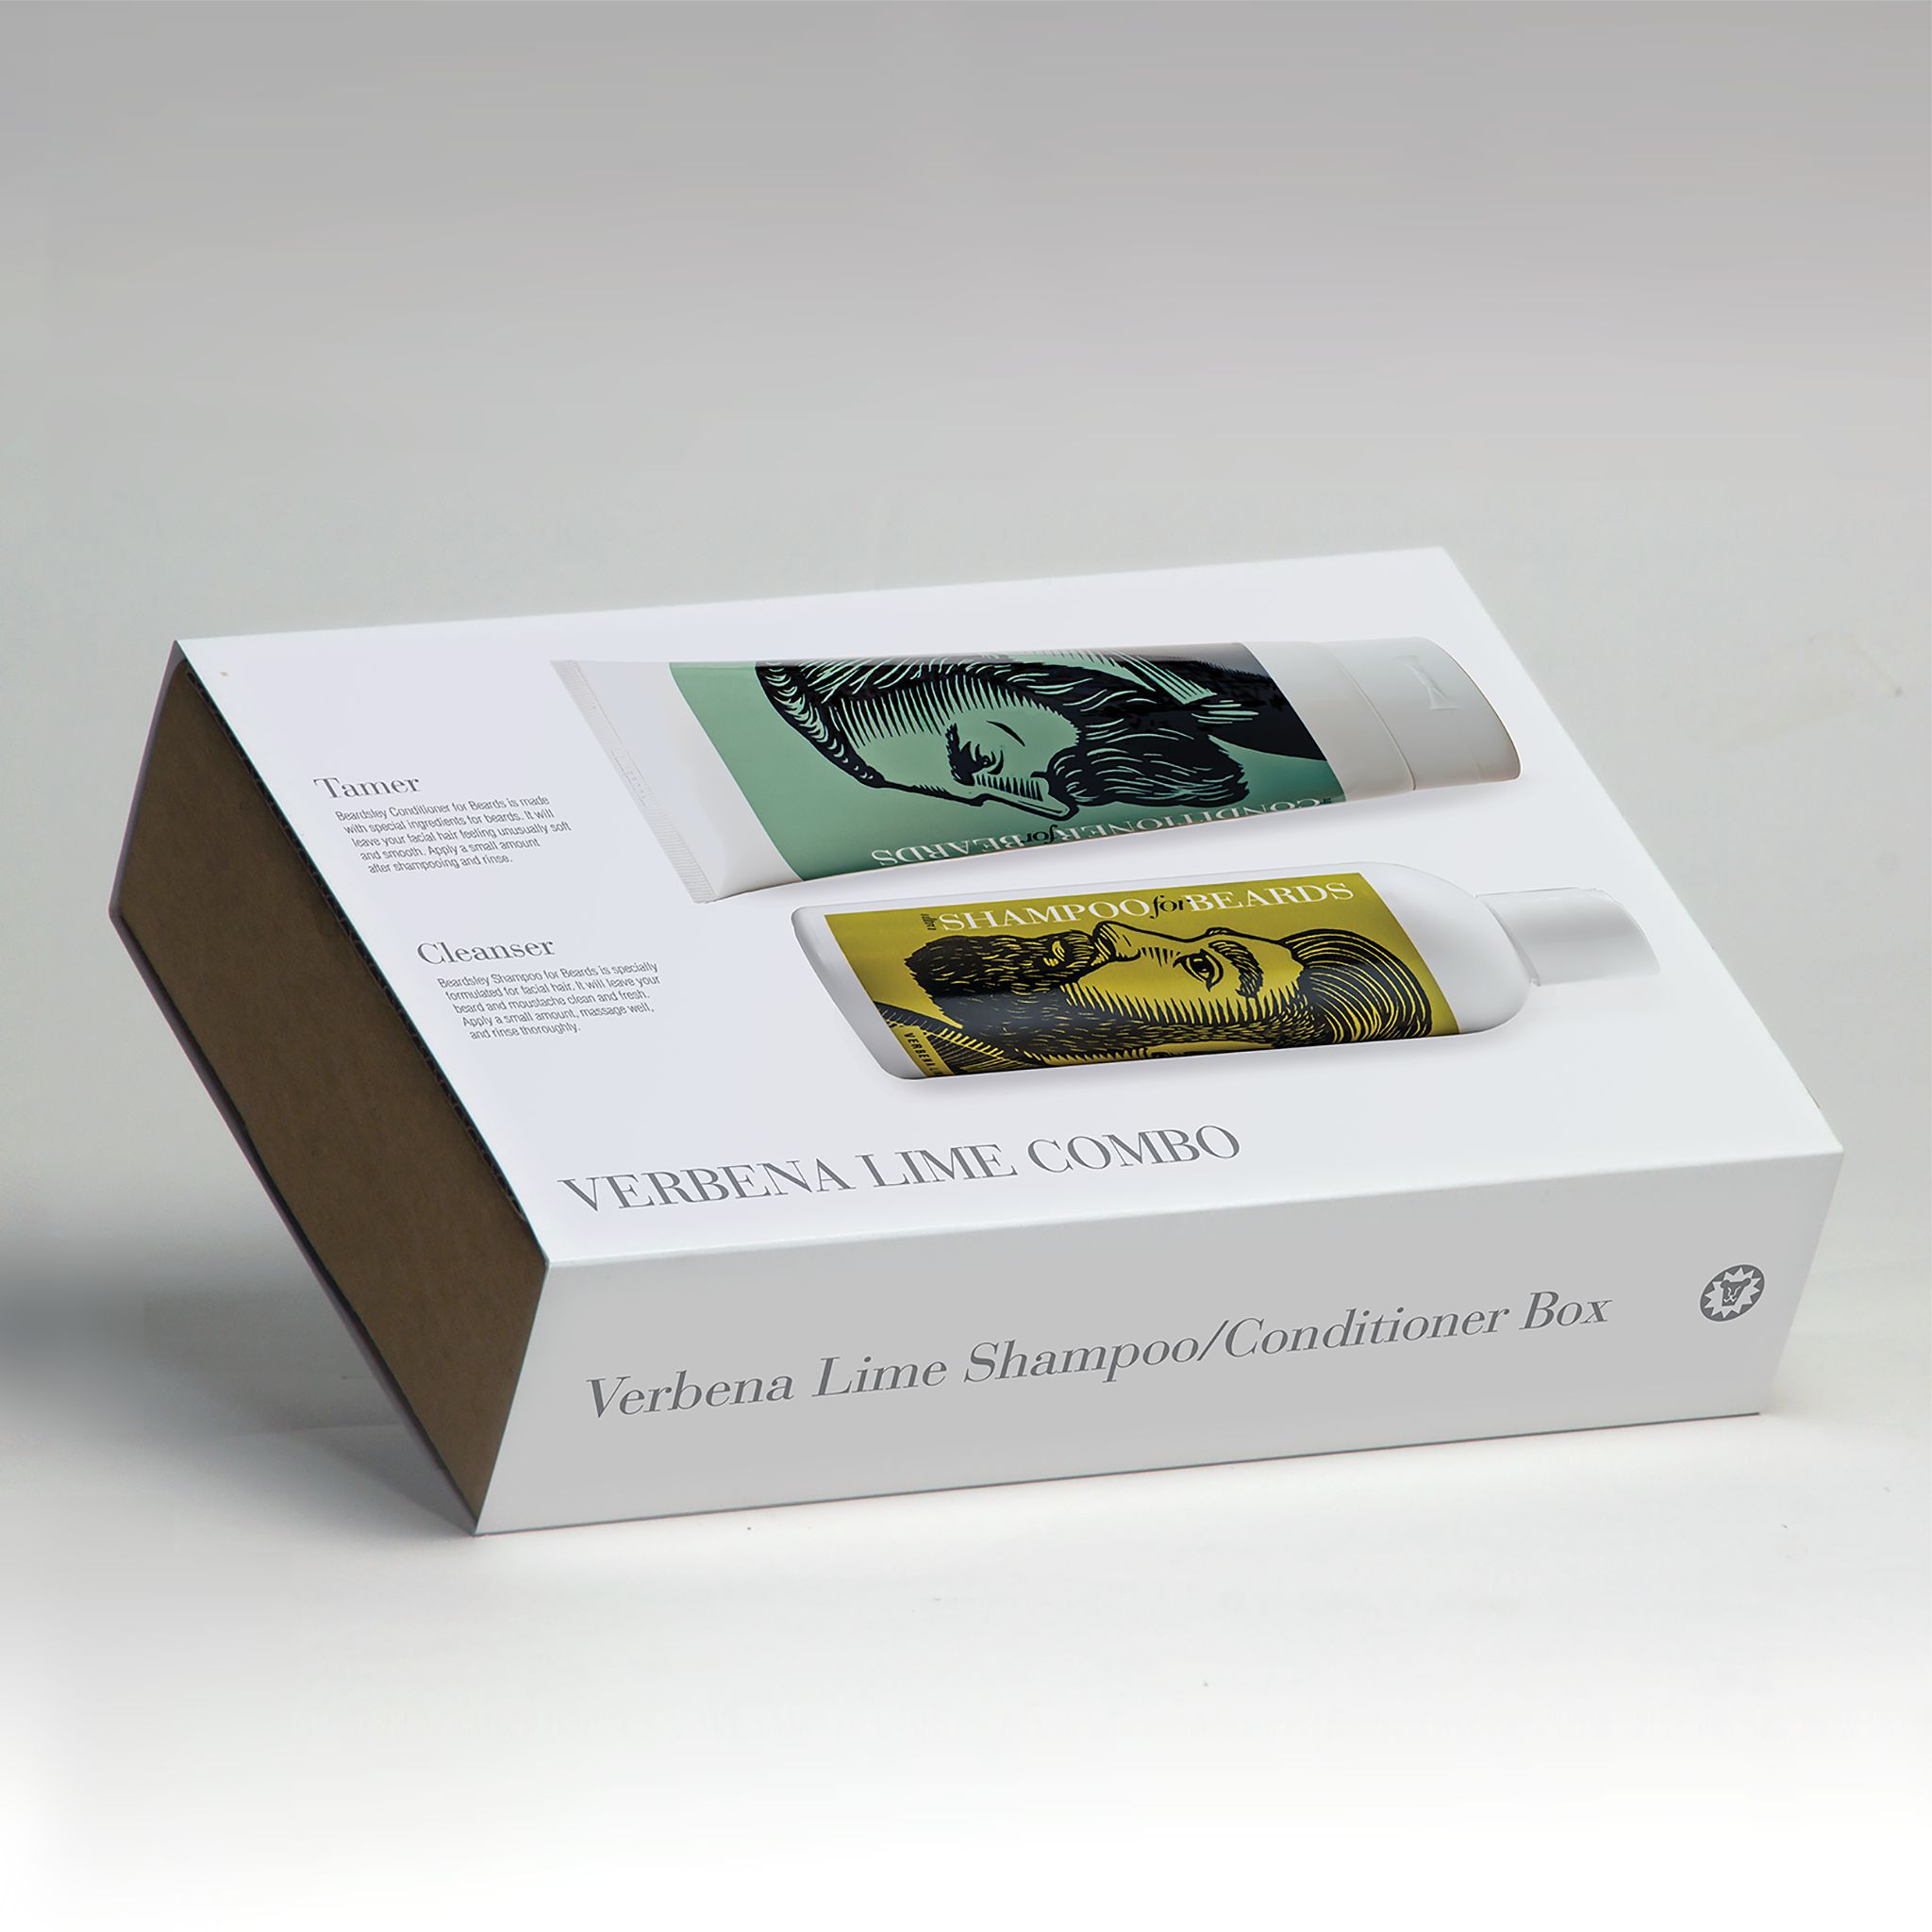 Beardsley Verbena Lime Shampoo/Conditioner Box